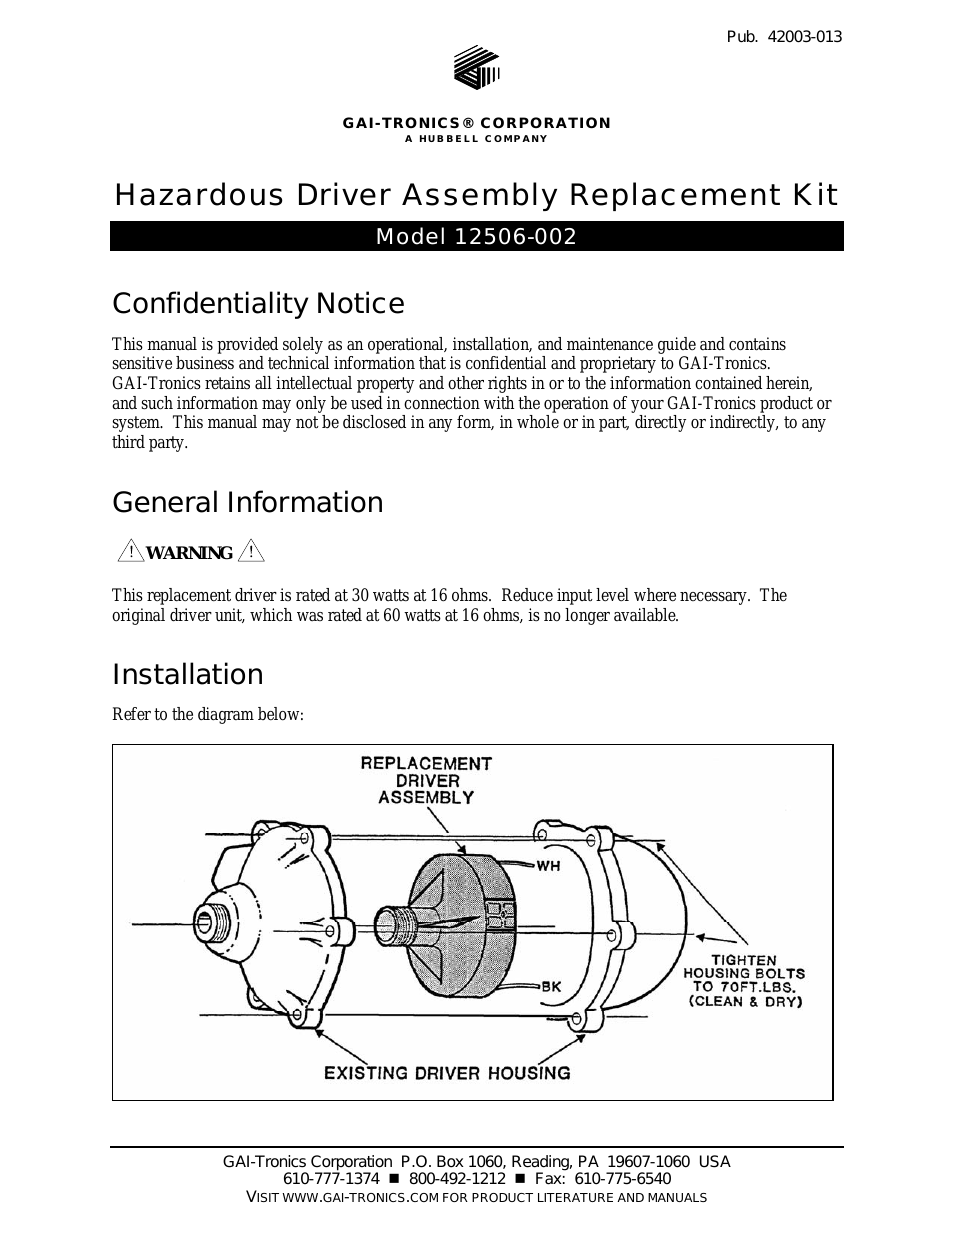 12506-002 Hazardous Driver Replacement Kit